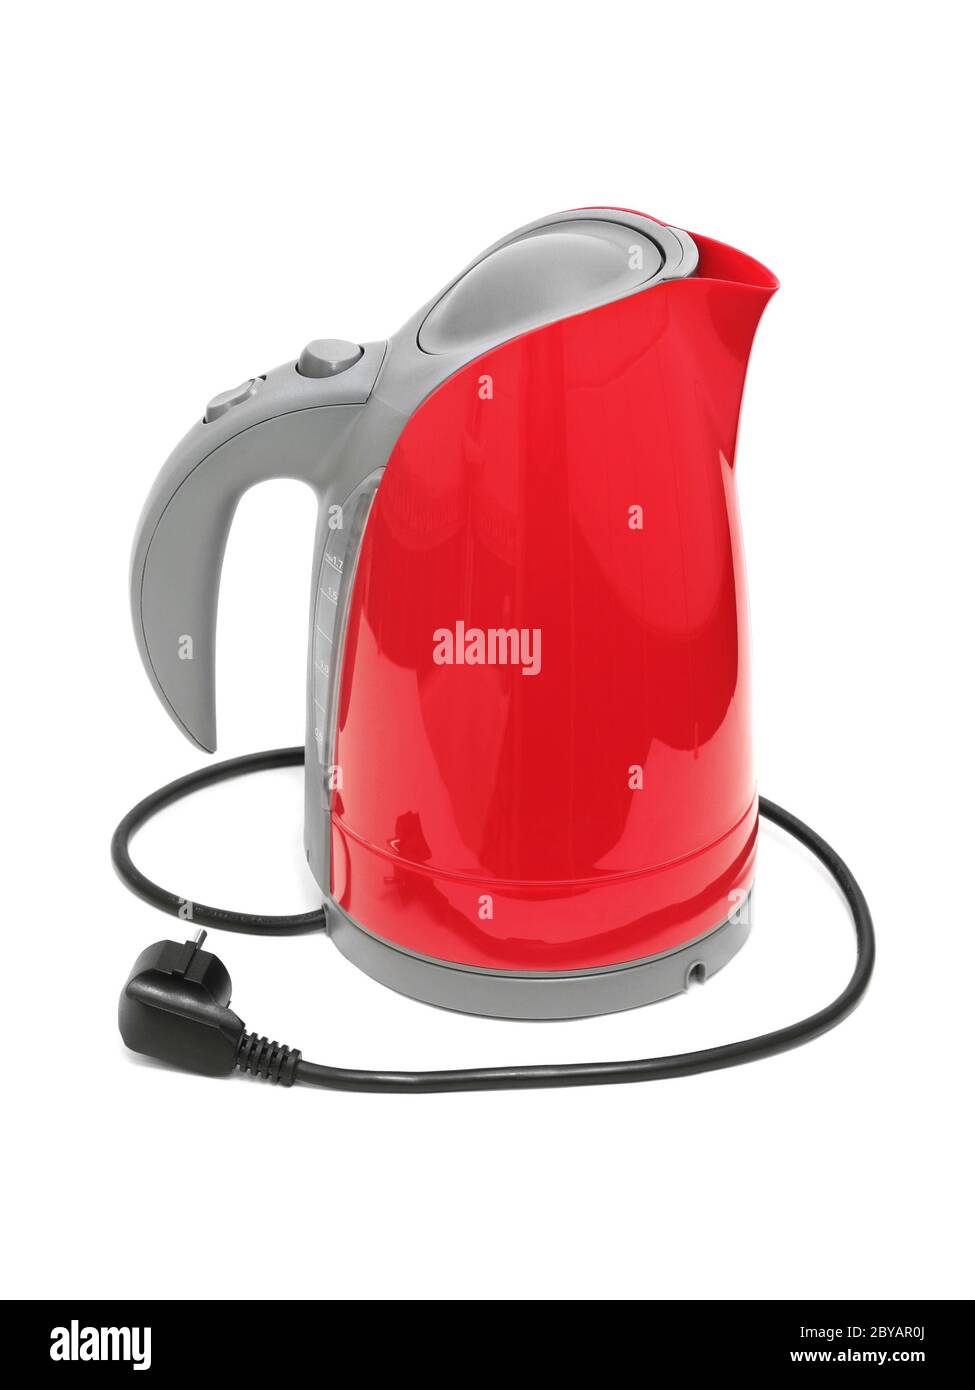 https://c8.alamy.com/comp/2BYAR0J/electric-kettle-2BYAR0J.jpg